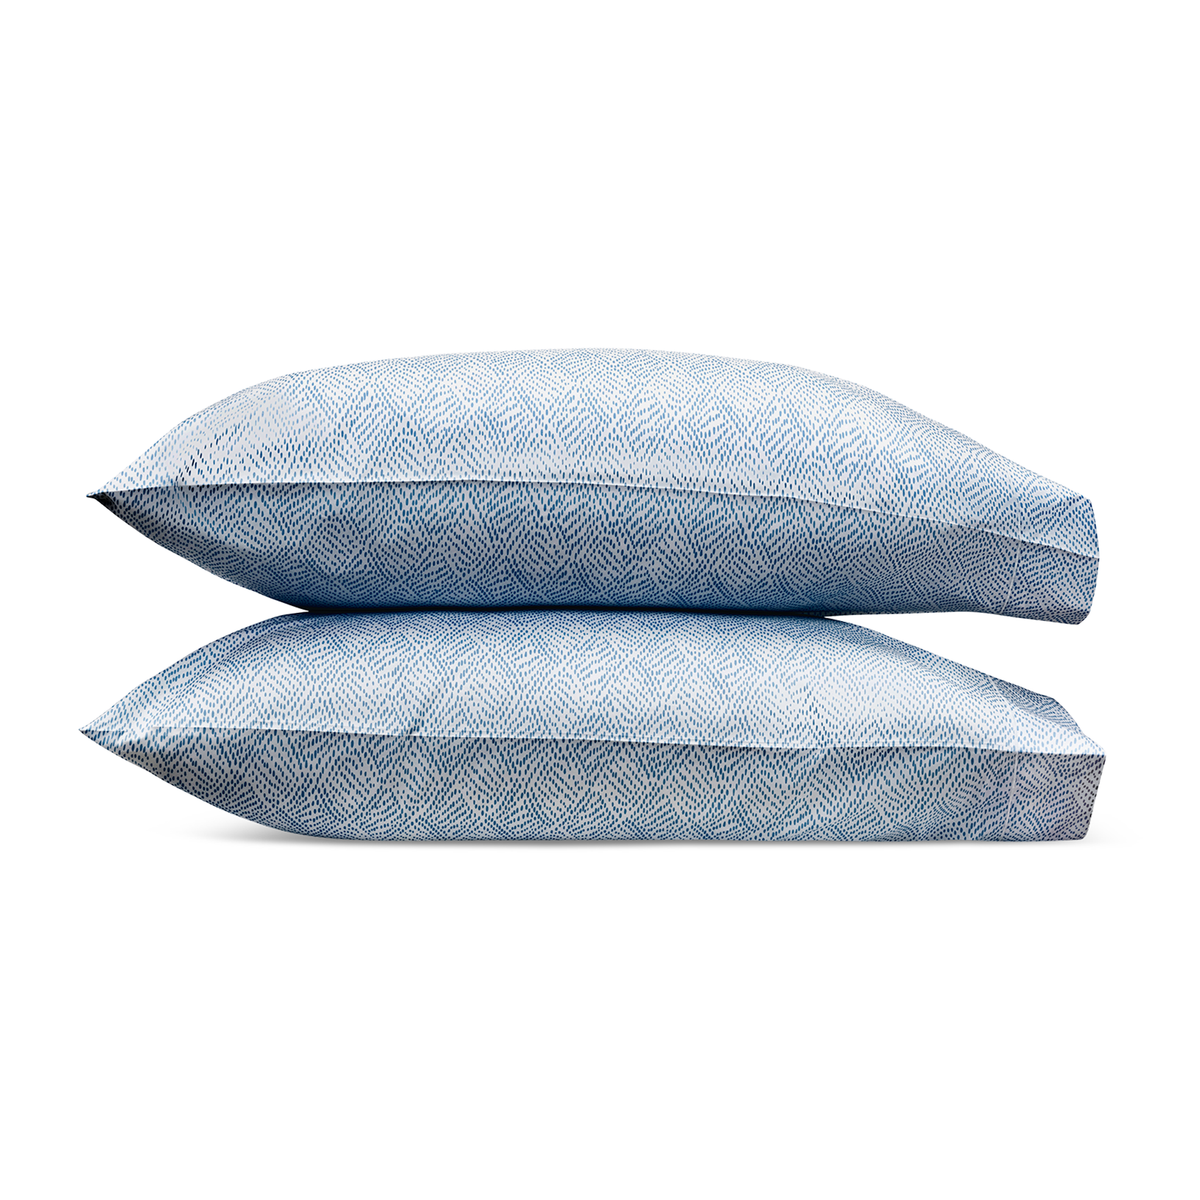 Pair of Pillowcase of Matouk Duma Diamond Bedding in Sky Color